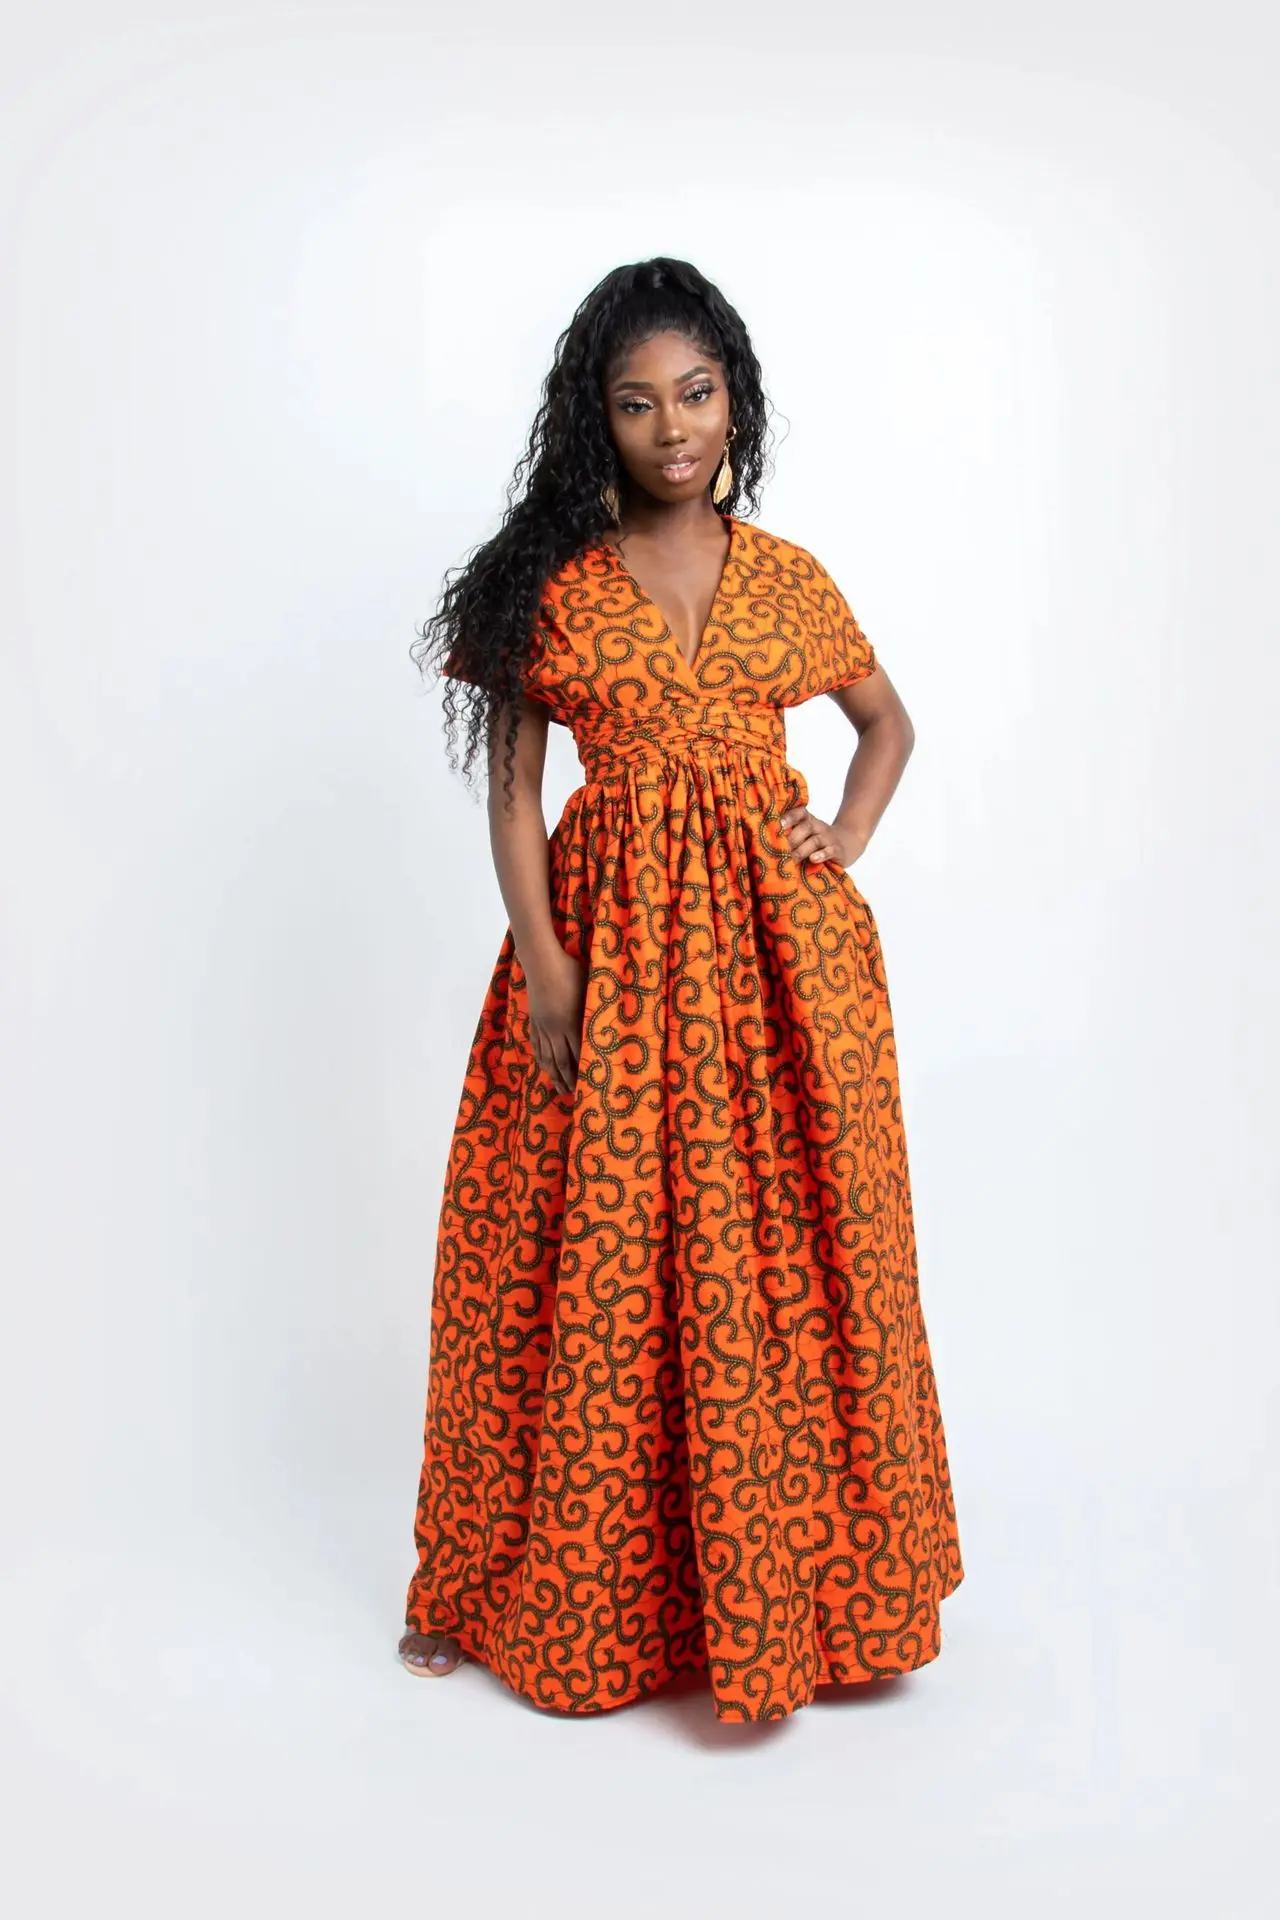 Longue robe africaine wax pour femmes 253